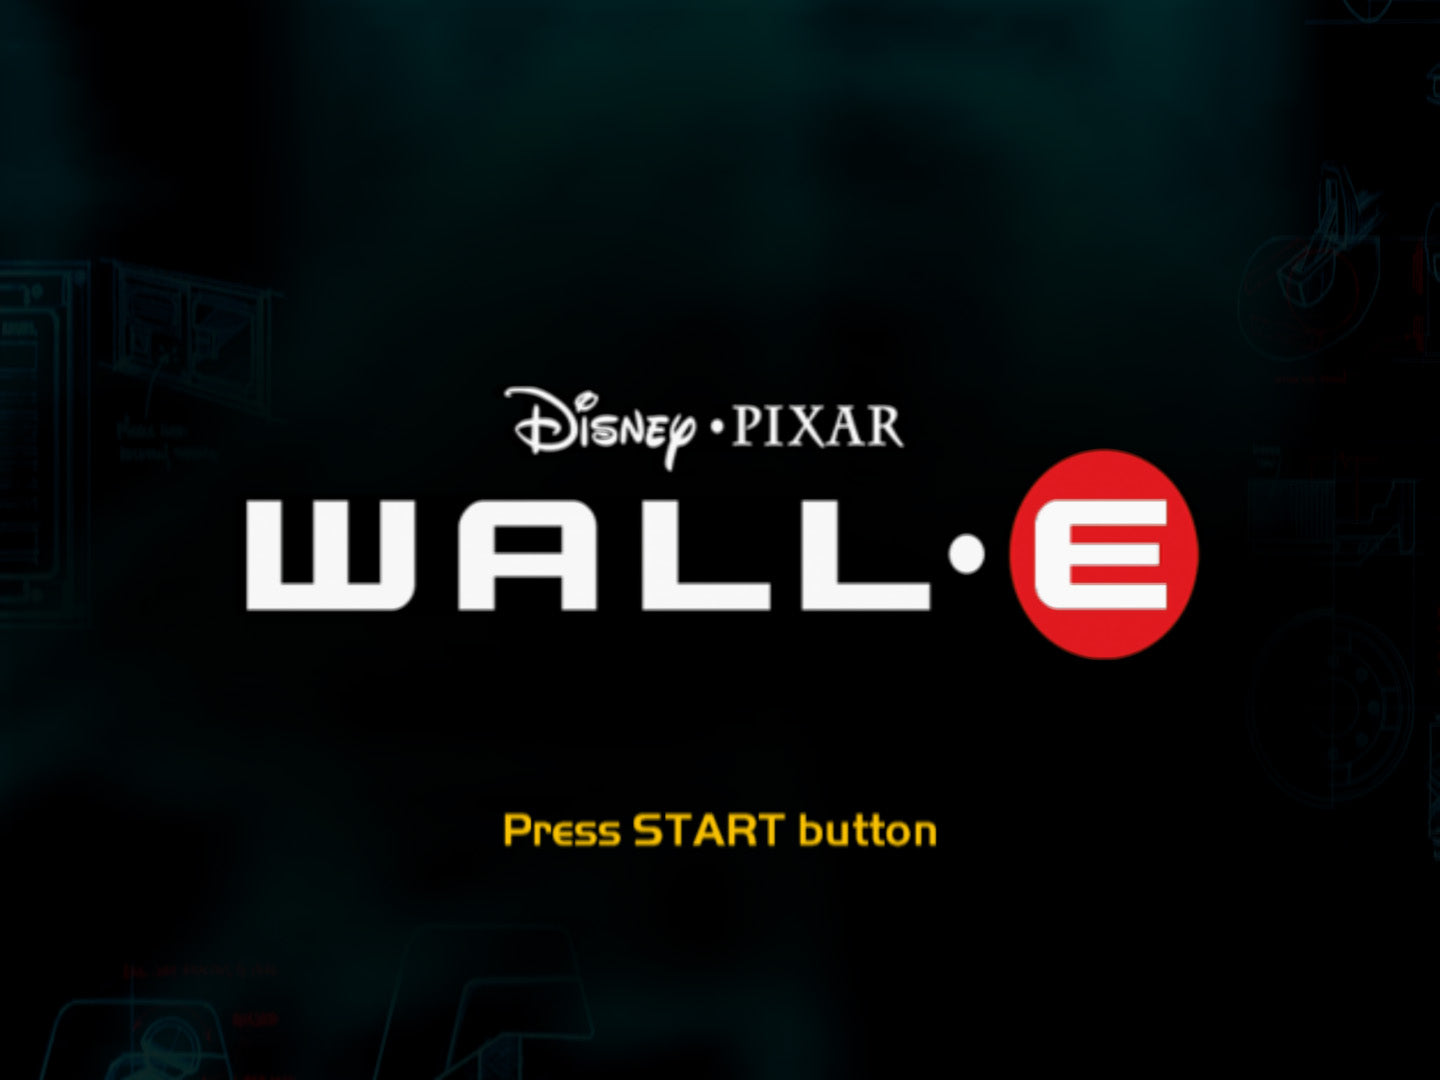 WALL-E - Nintendo Wii Game